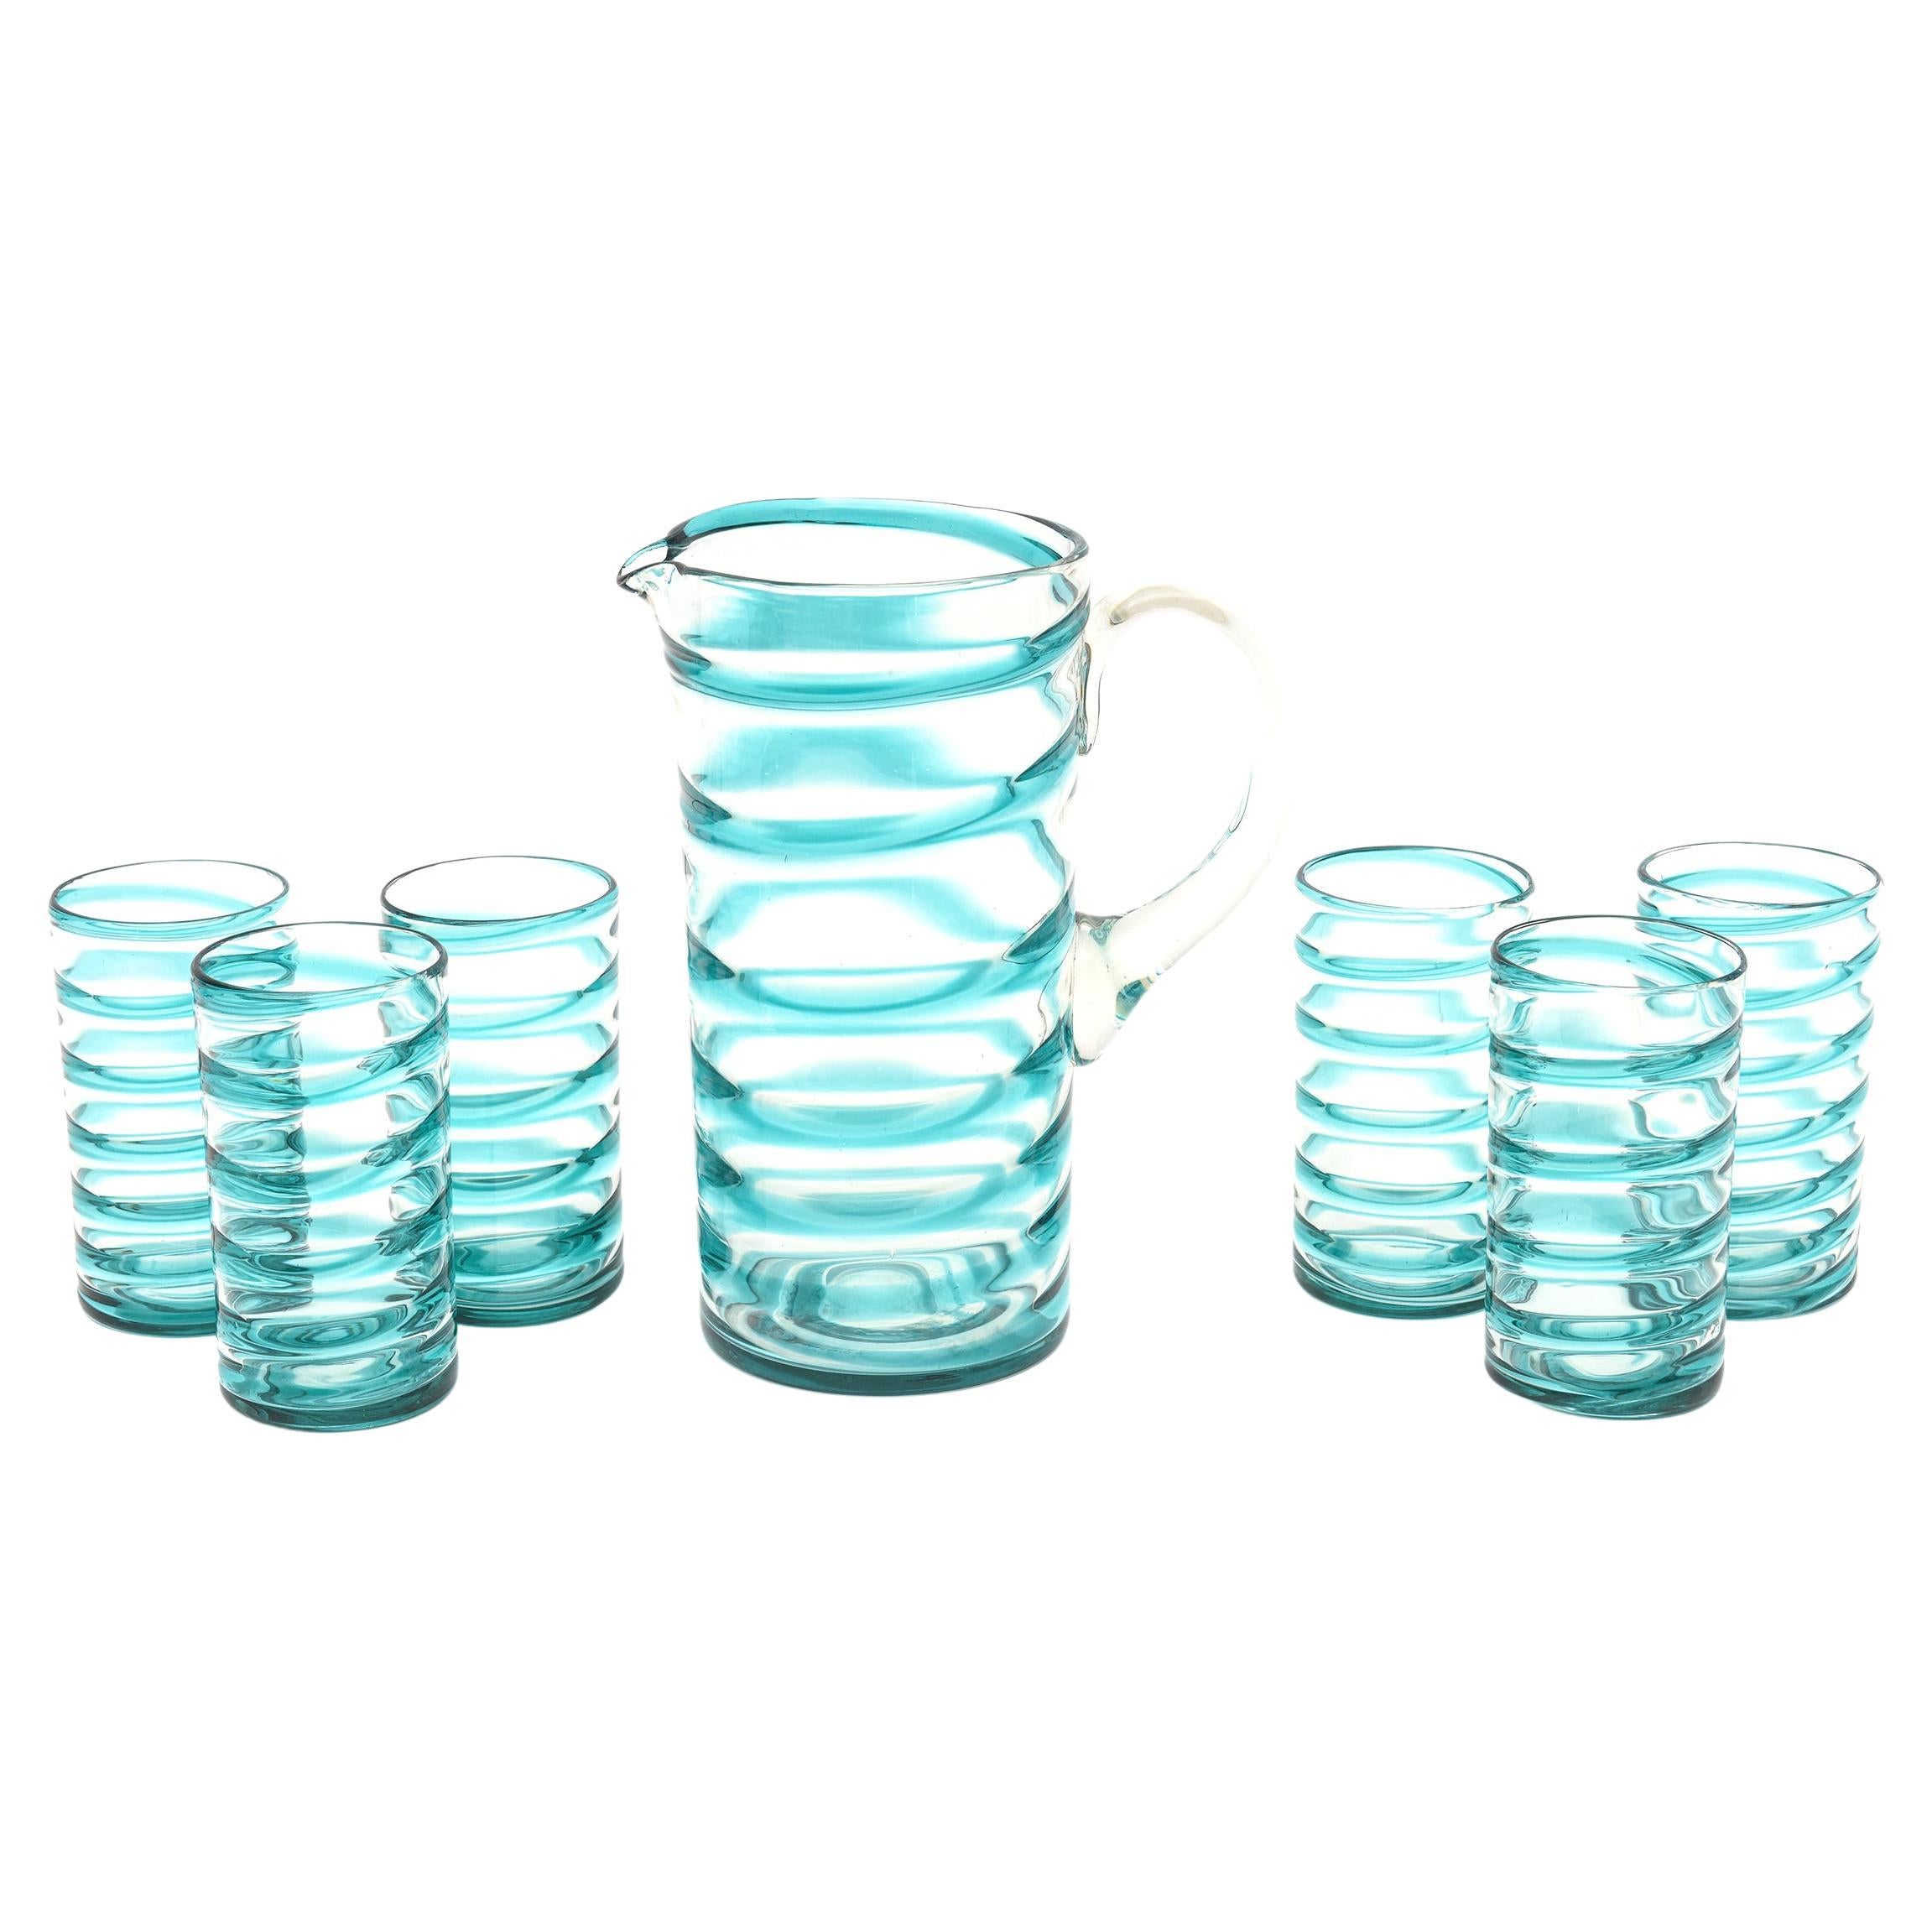 Murano Venini Turquoise Glass Swirled Ice Tea Or Lemonade Pitcher & Glasses Set For Sale